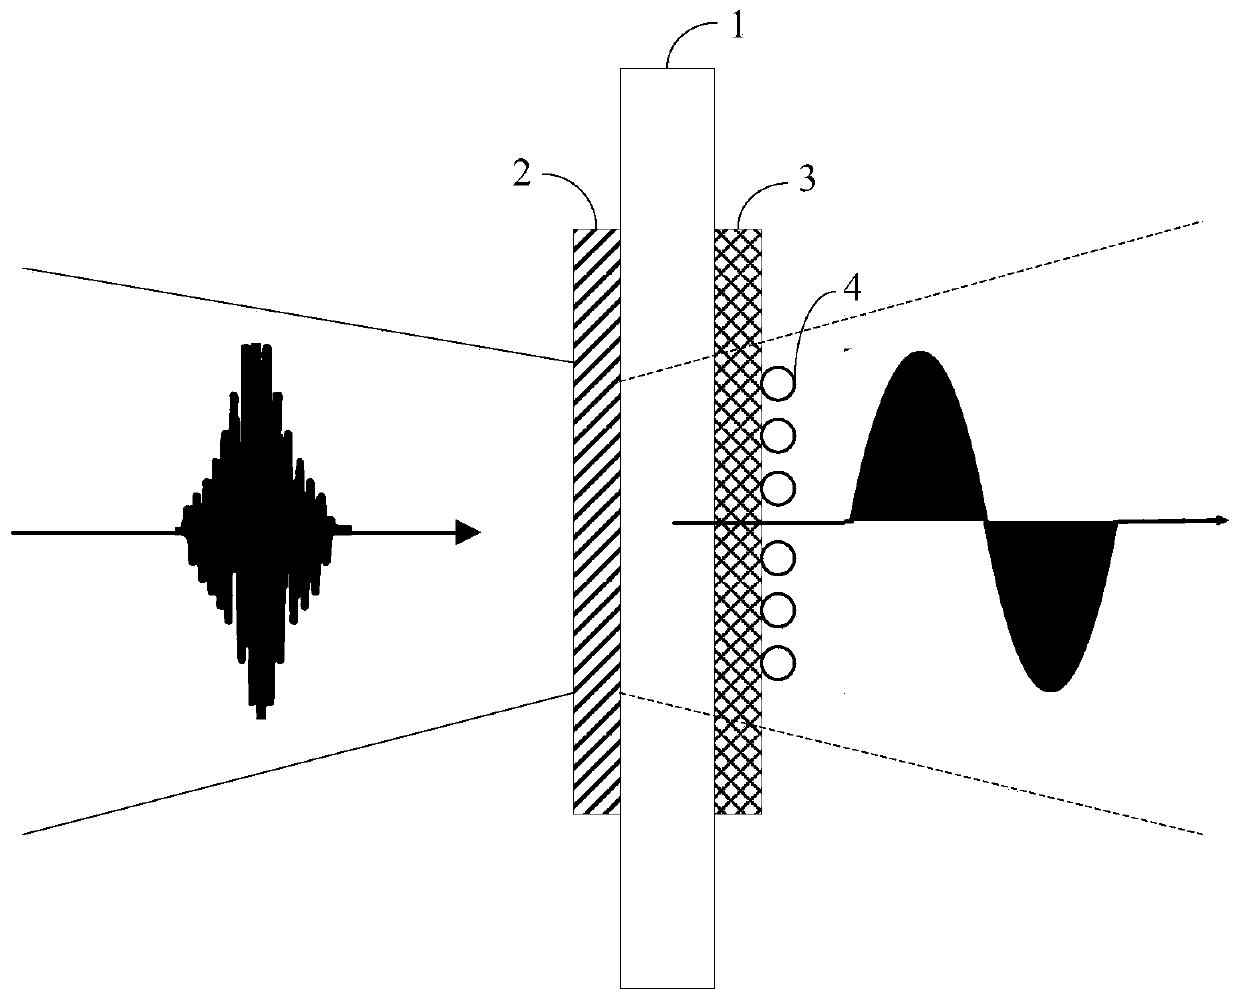 Spin biosensor and terahertz time domain spectroscopy system